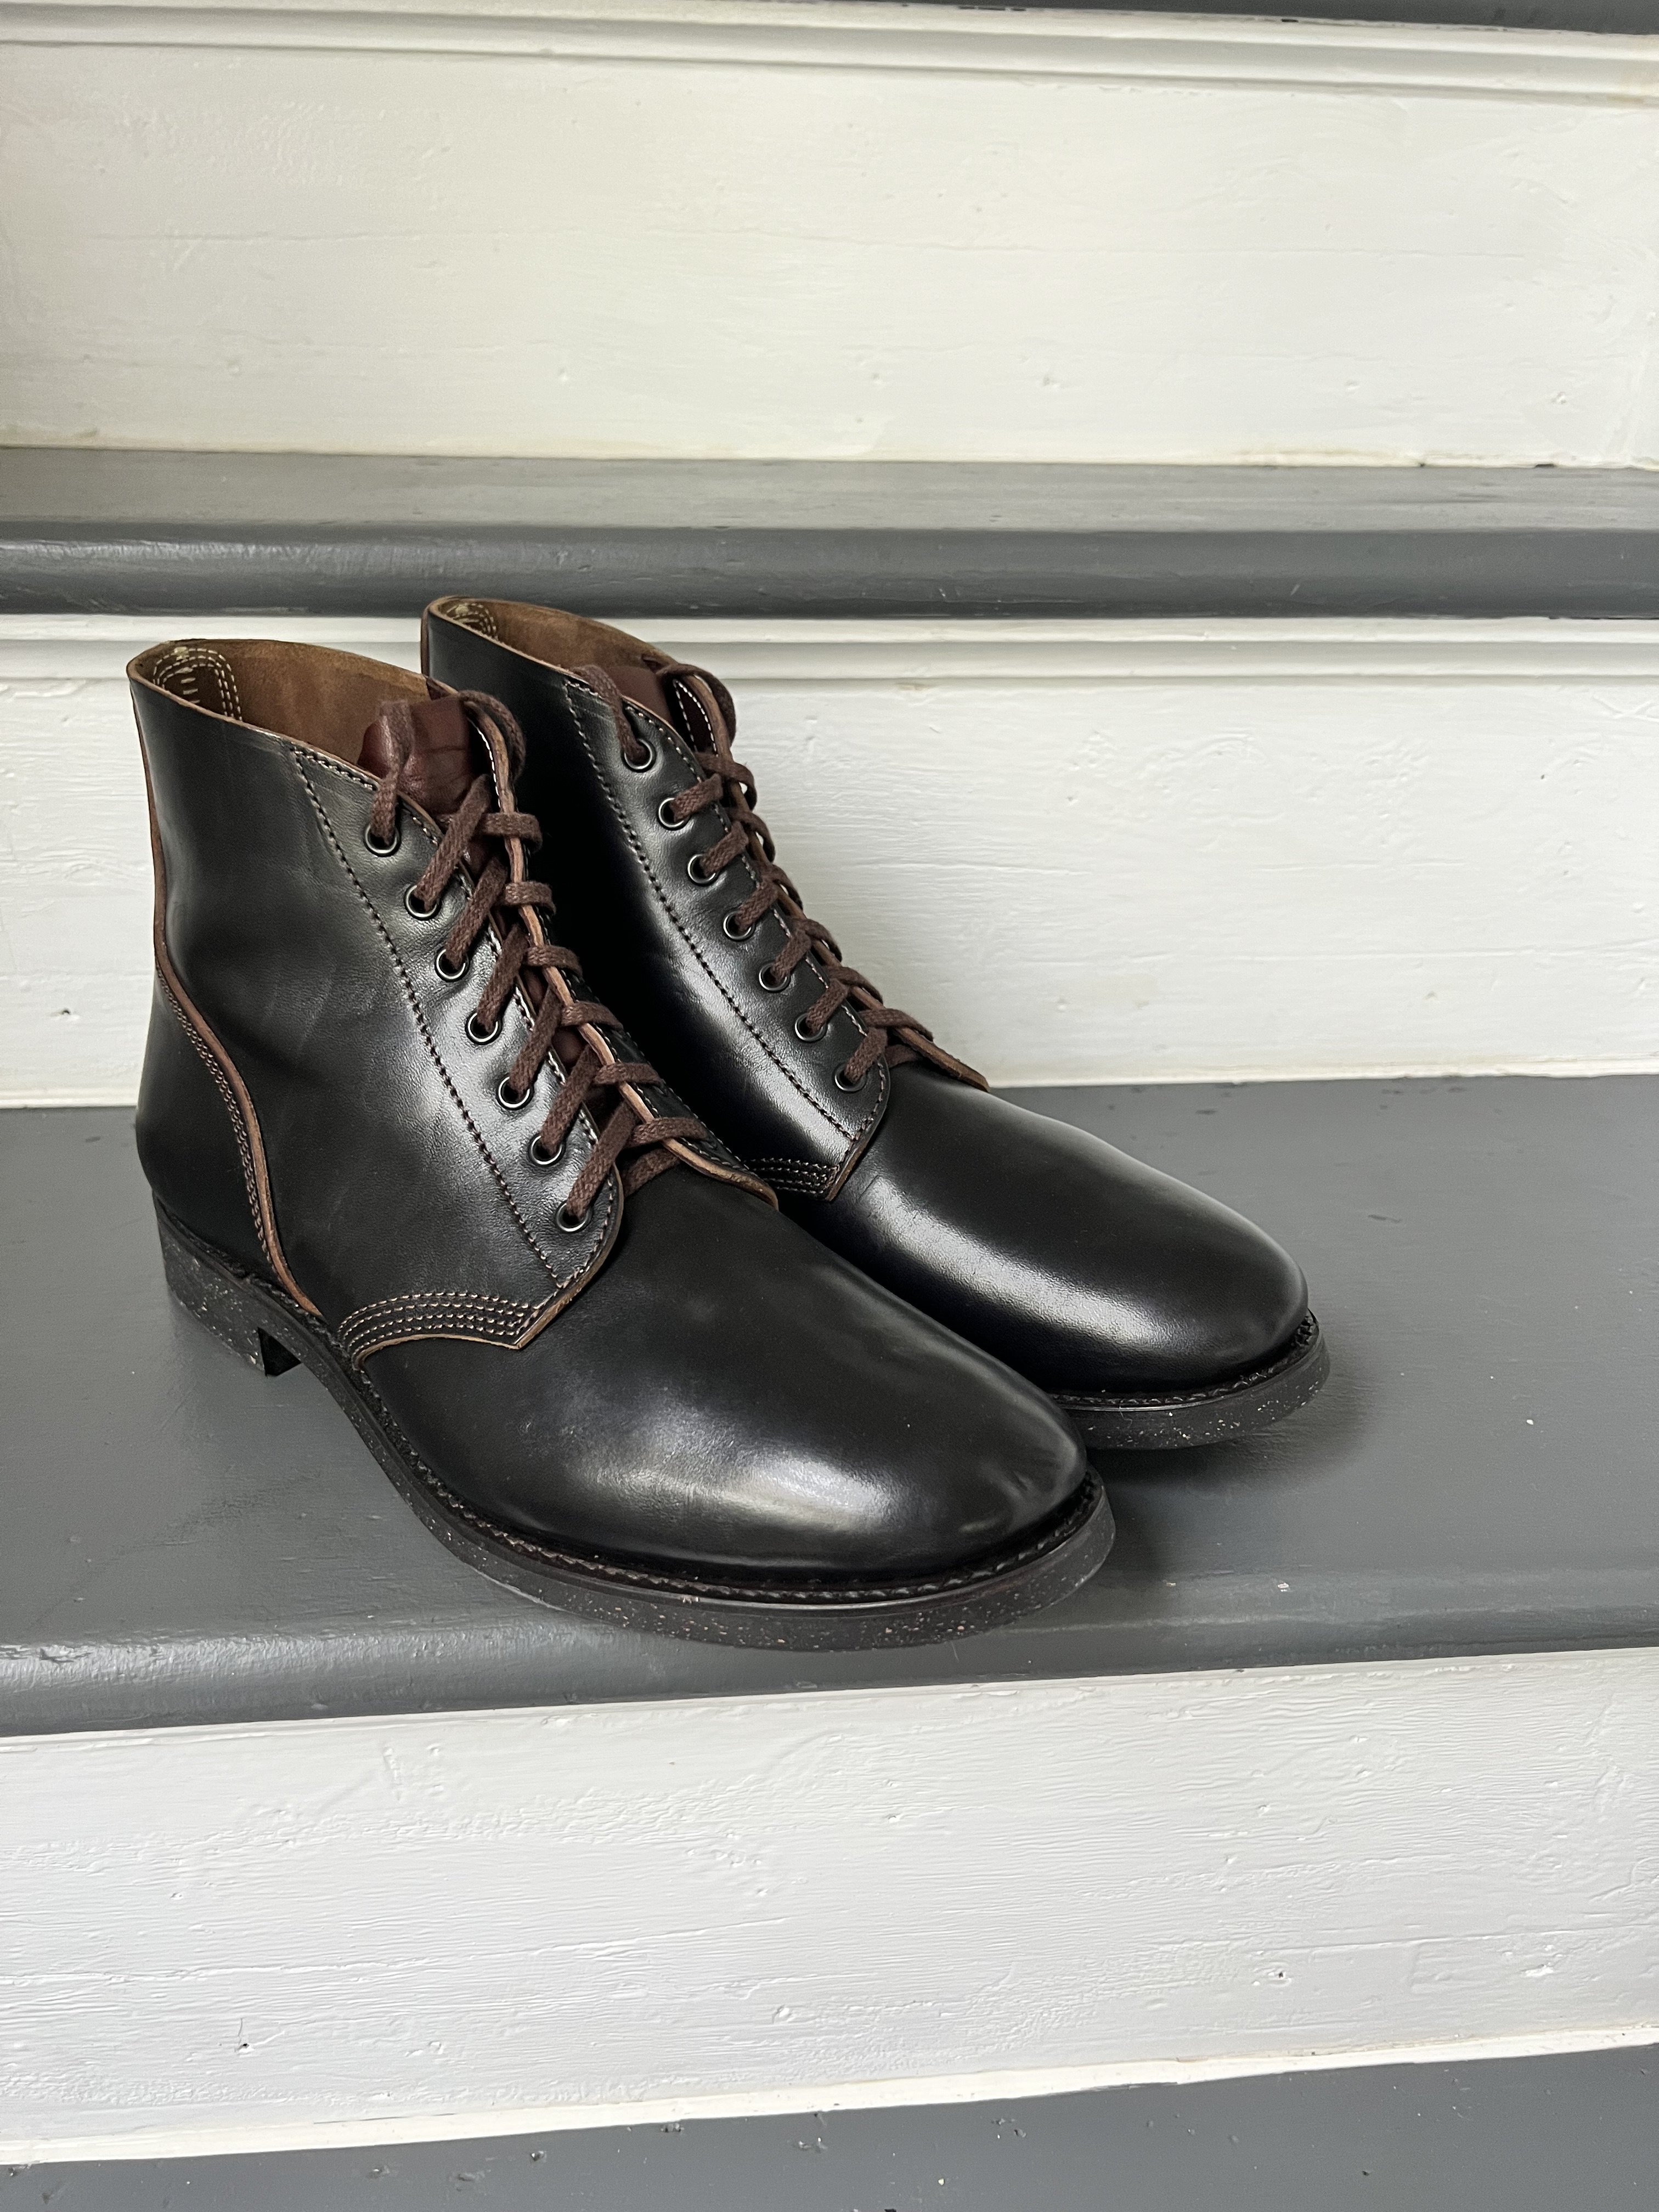 Skoob x Lua M43 Boots Black Horsebutt, Size 9.5 or 27.5 | The Fedora Lounge